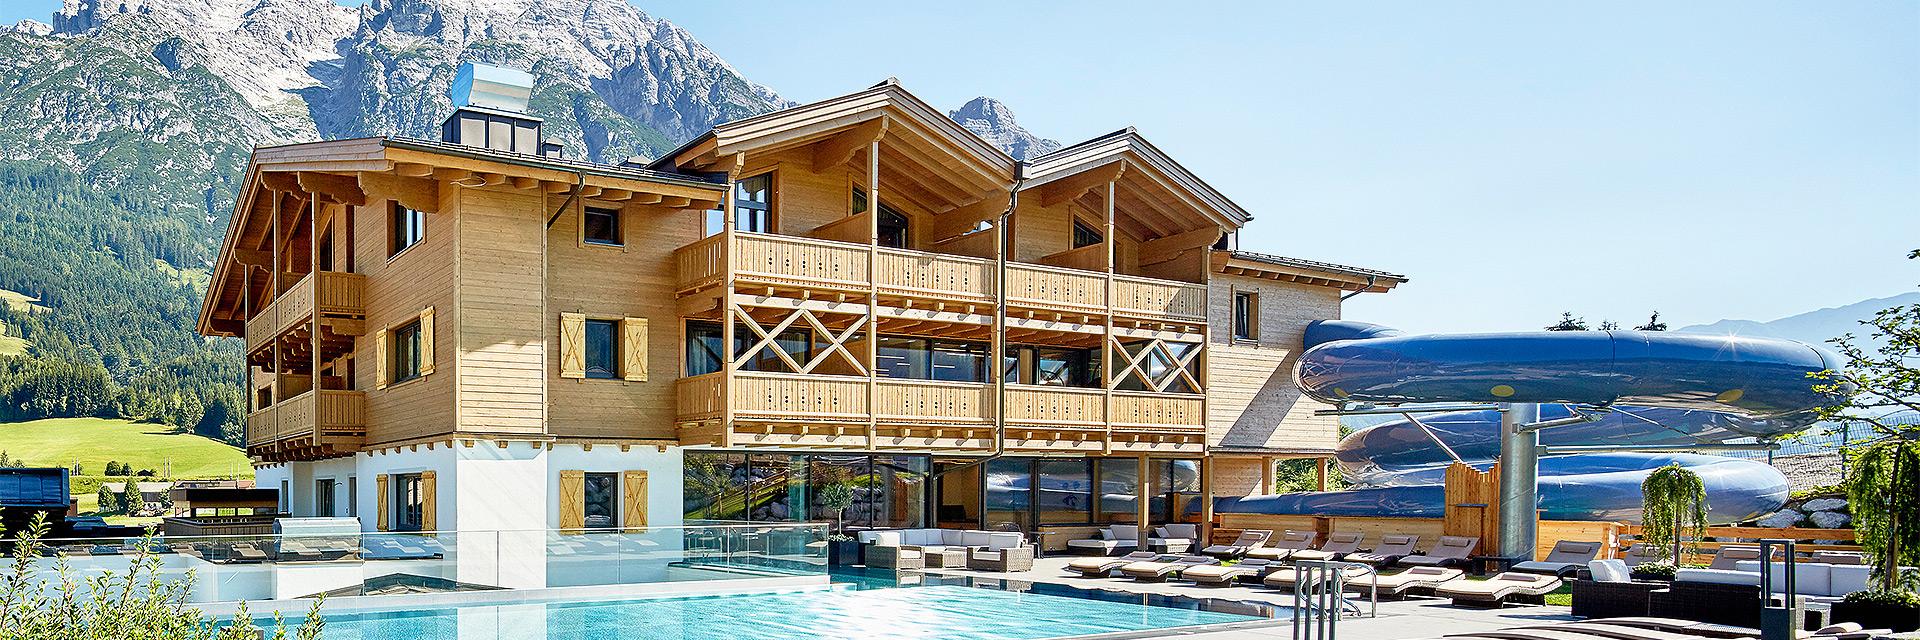 plus Overvind Autonomi Hotel Riederalm i Østrig | Pool, wellness, gourmet & luksus familieferie